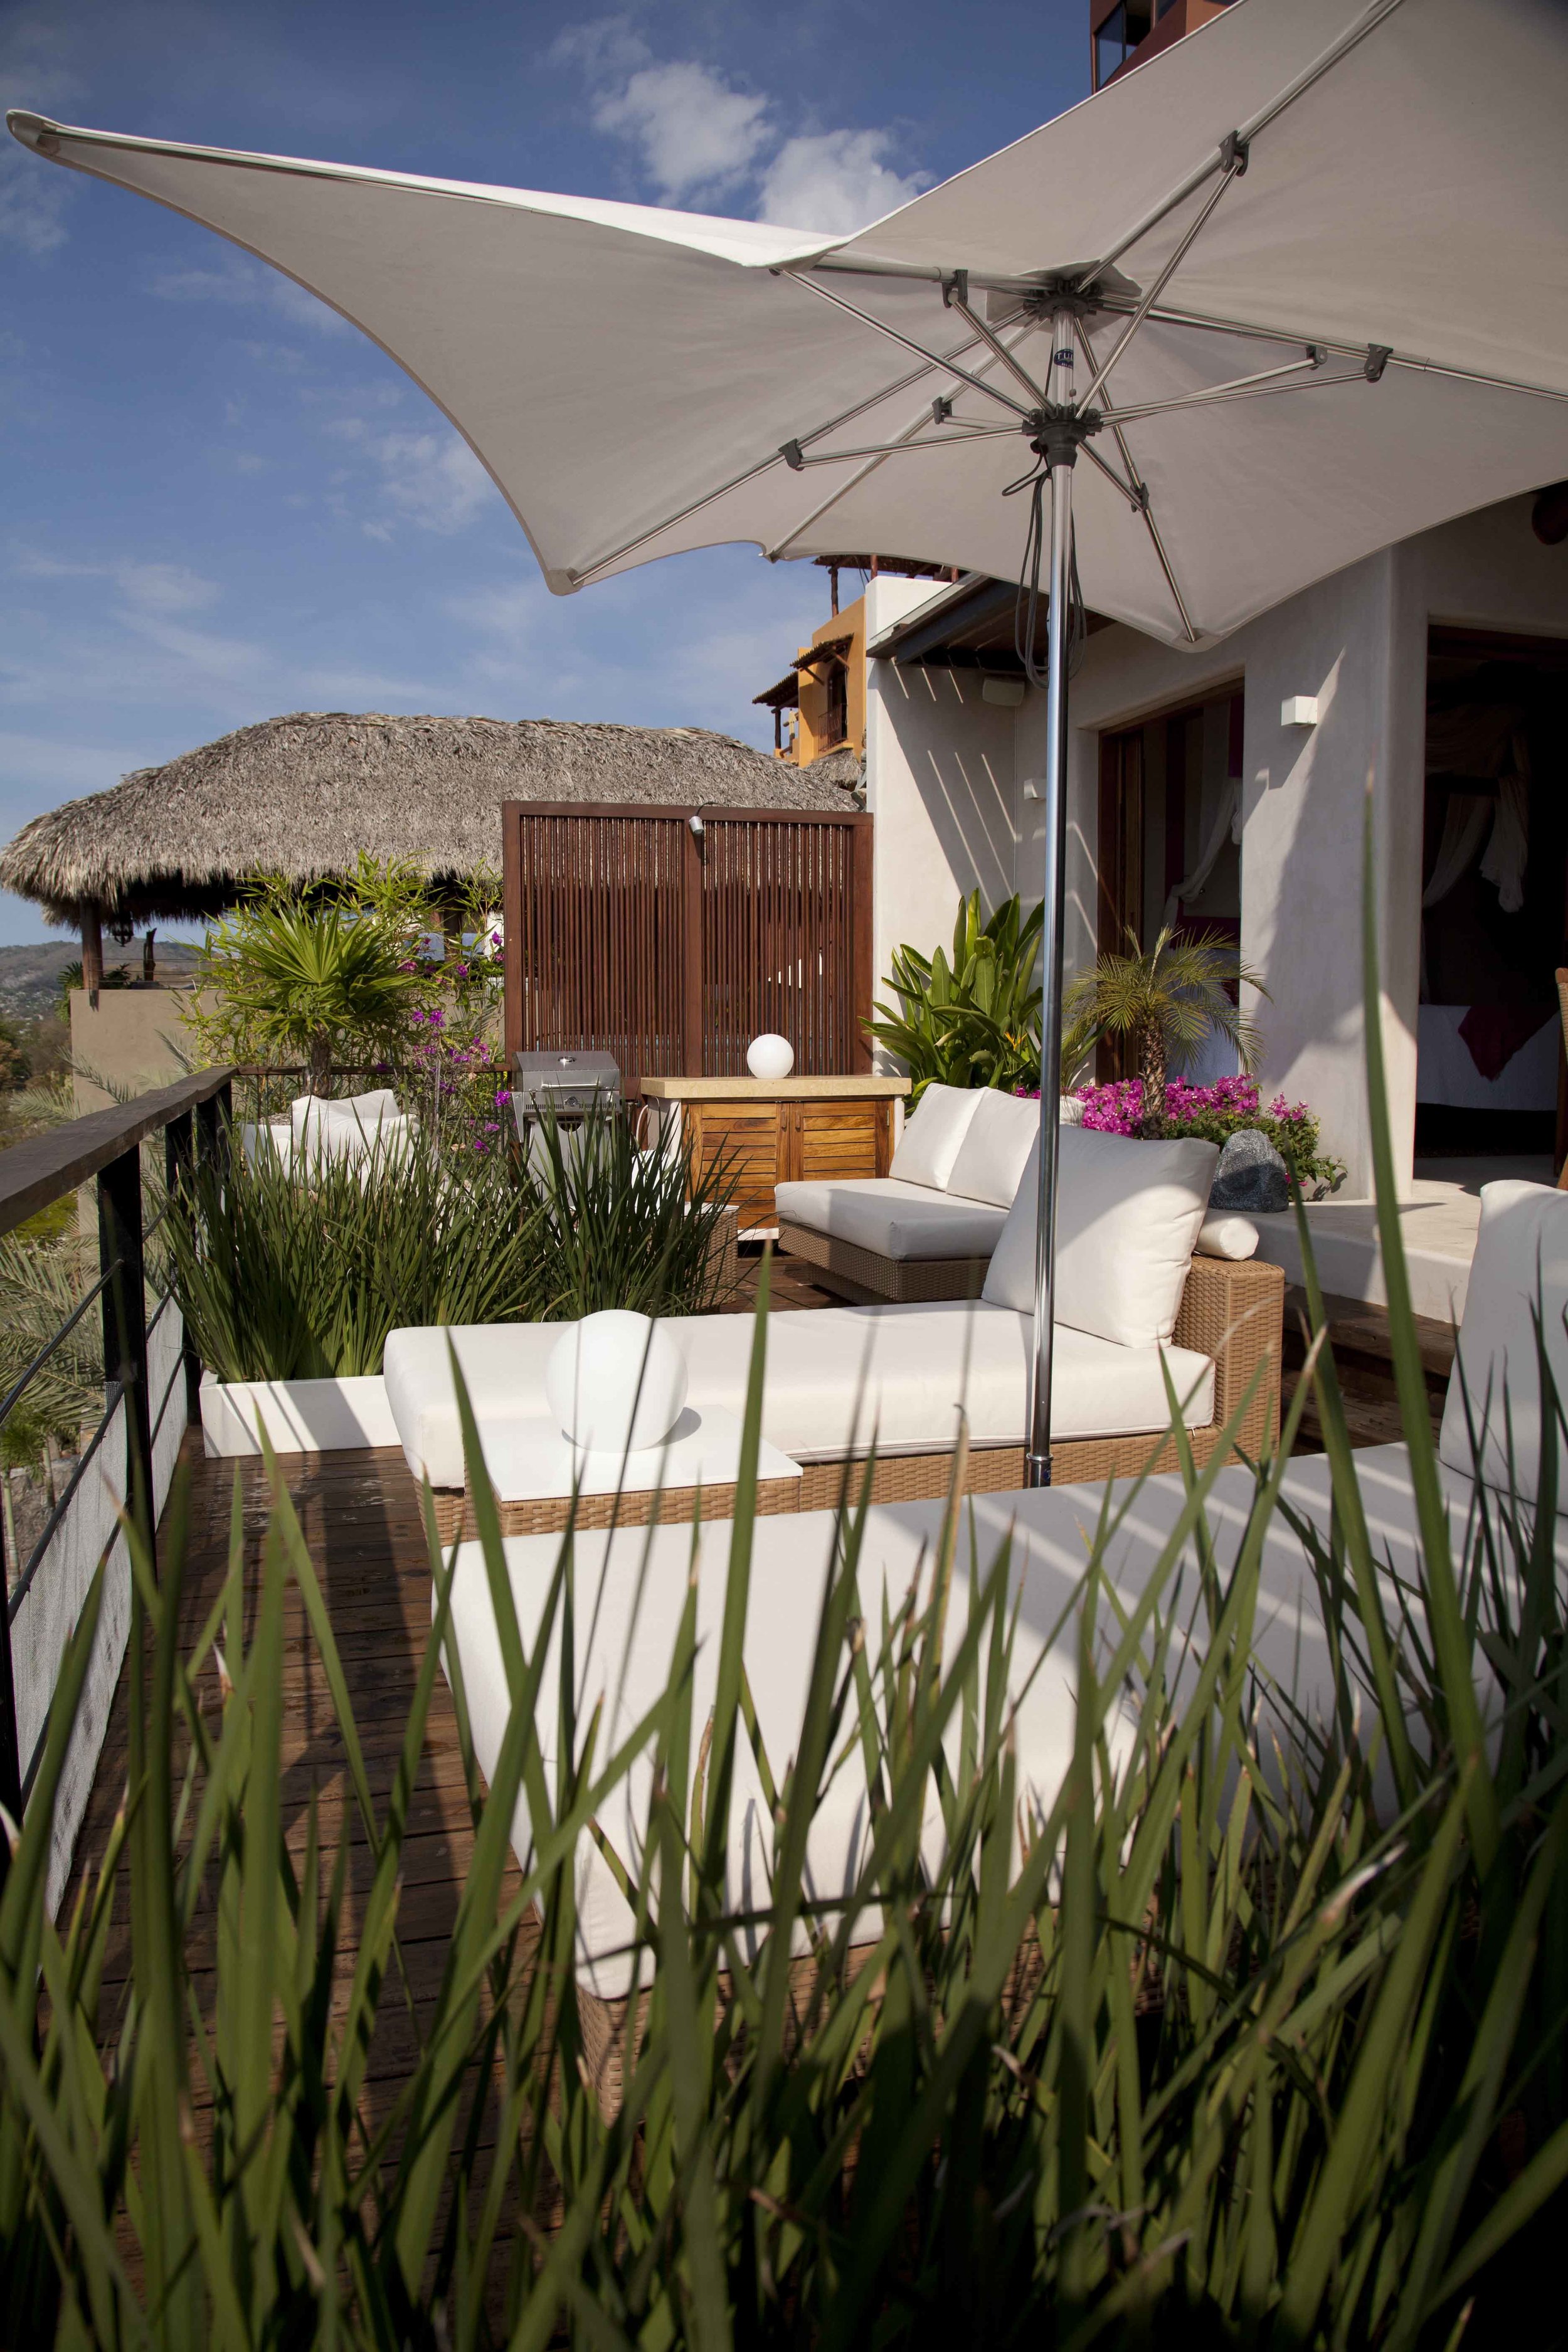 ensueno-casa-1-properties-condos-for-rent-sale-tara-medina-real-estate-zihuatanejo-mexico-ixtapa-full-ocean-view-deck-porch-view.jpg